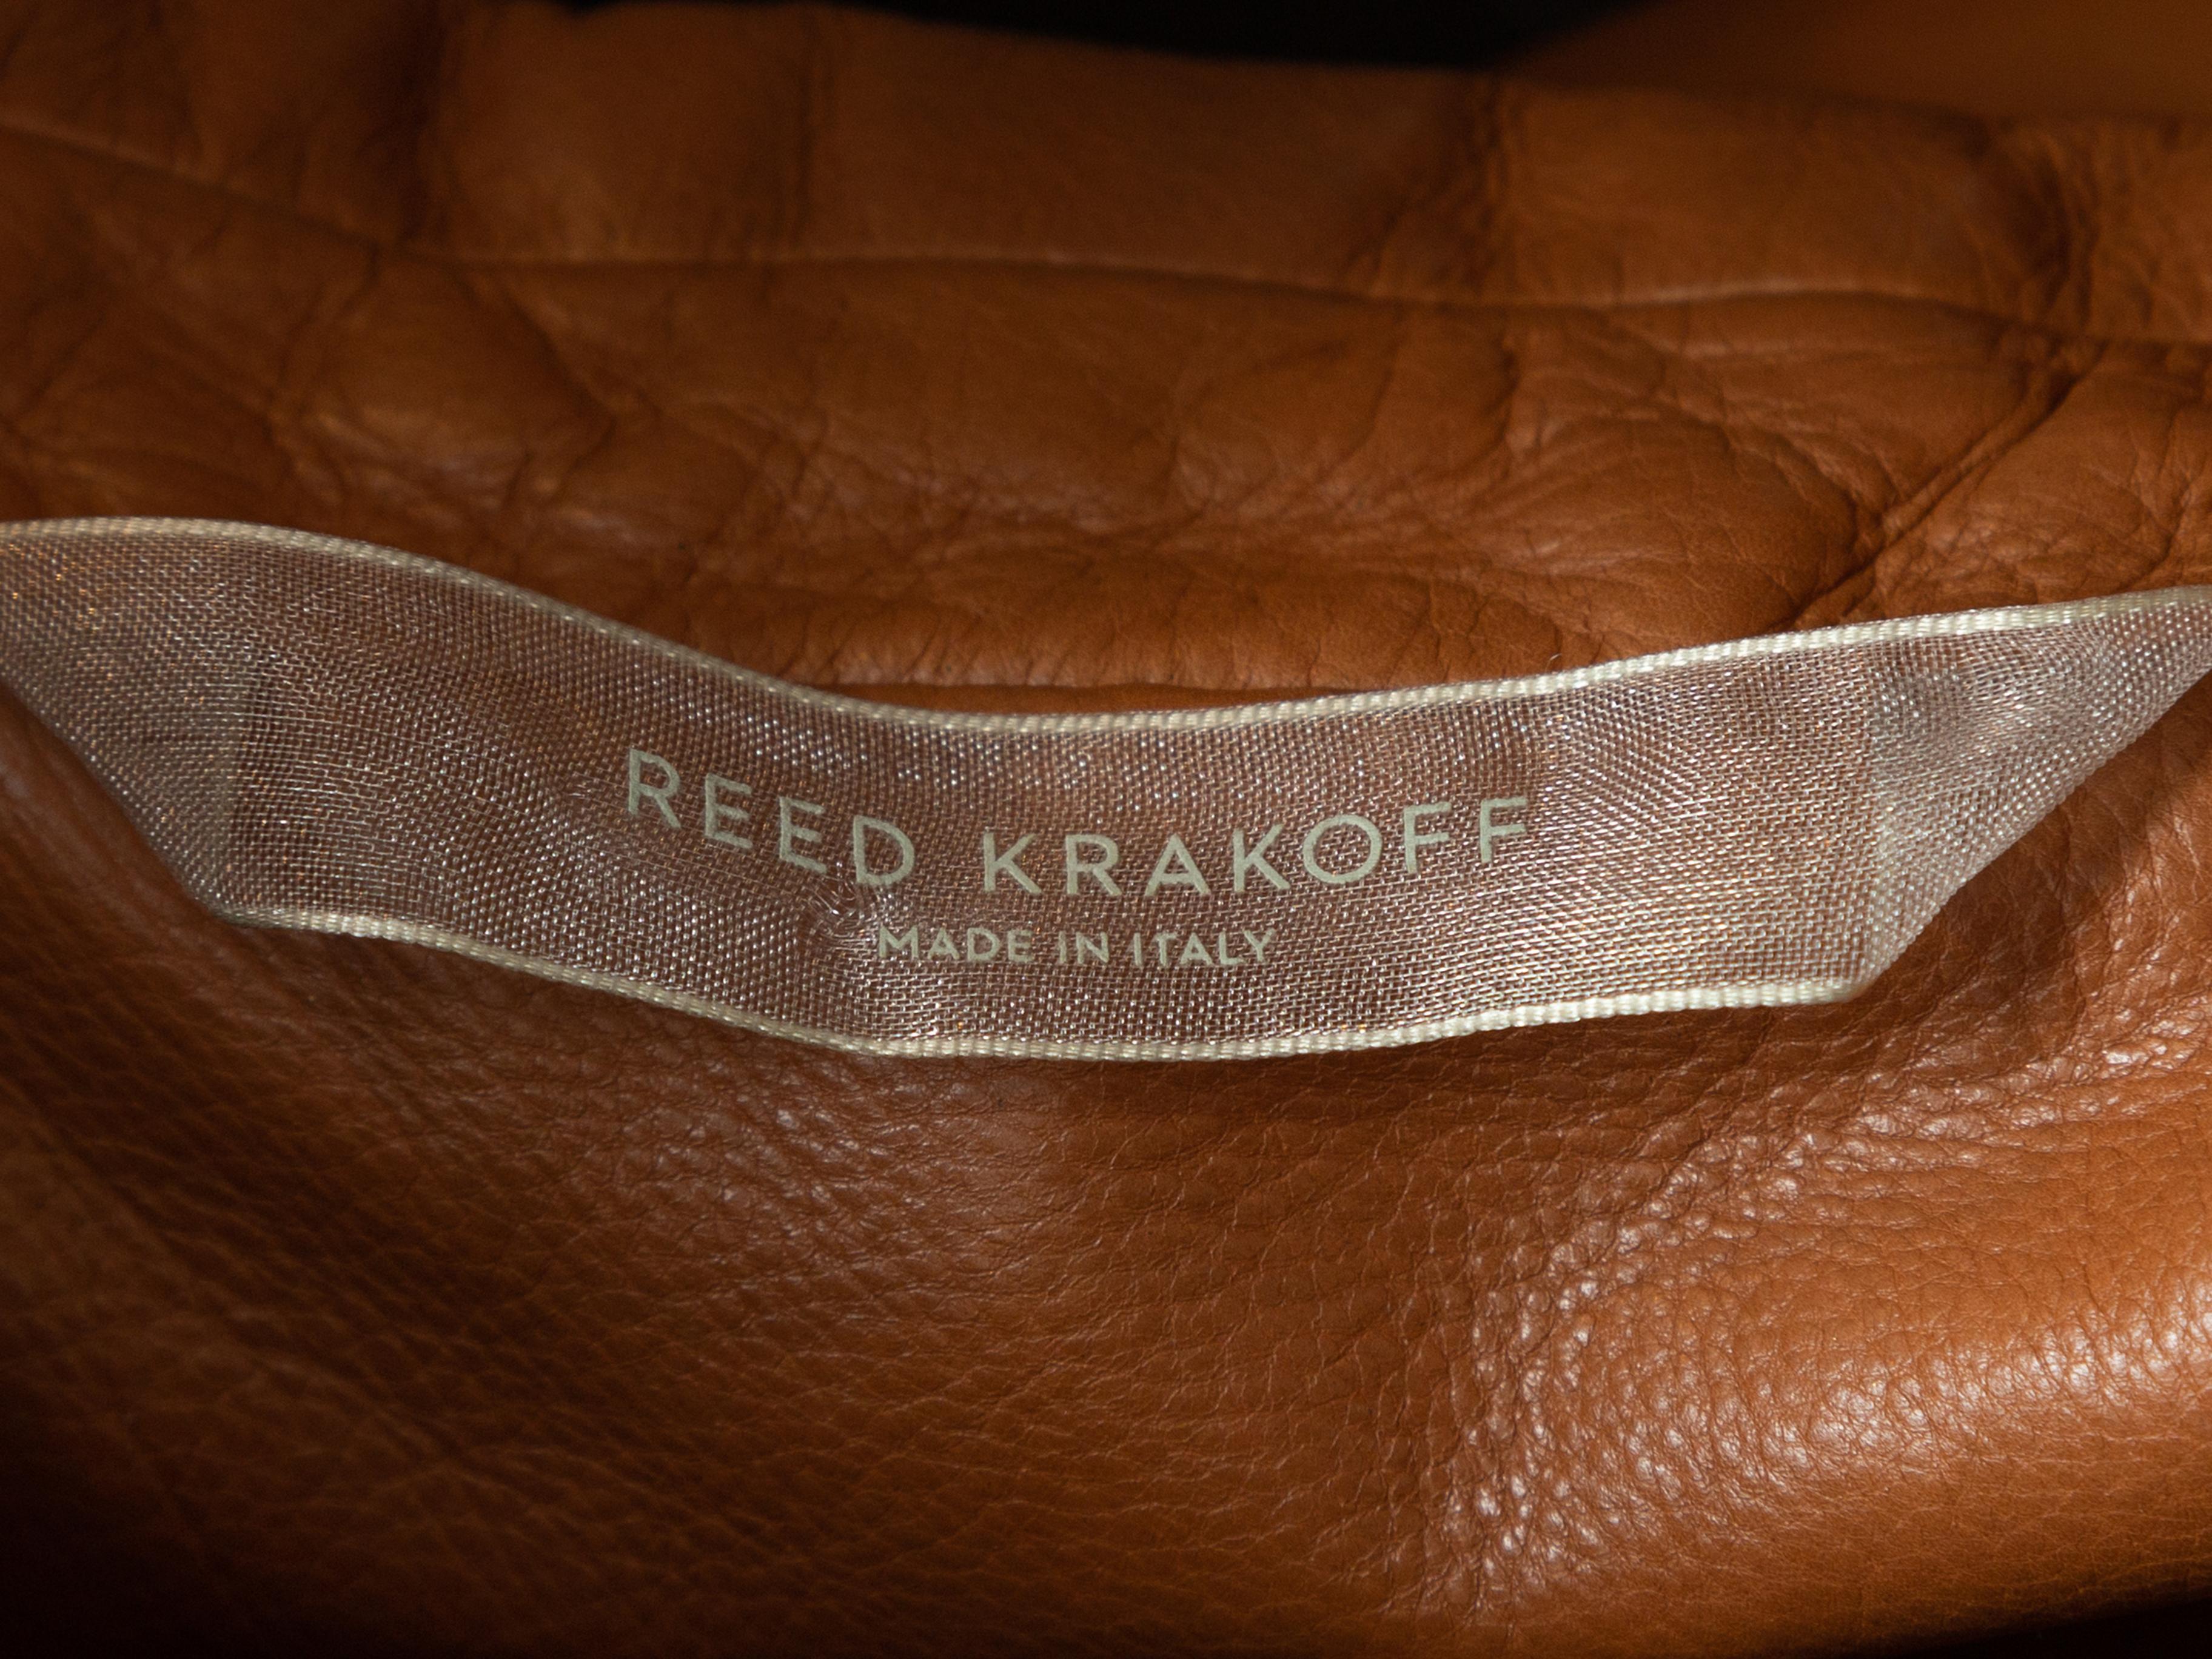 Orange Reed Krakoff Tan Leather Blazer